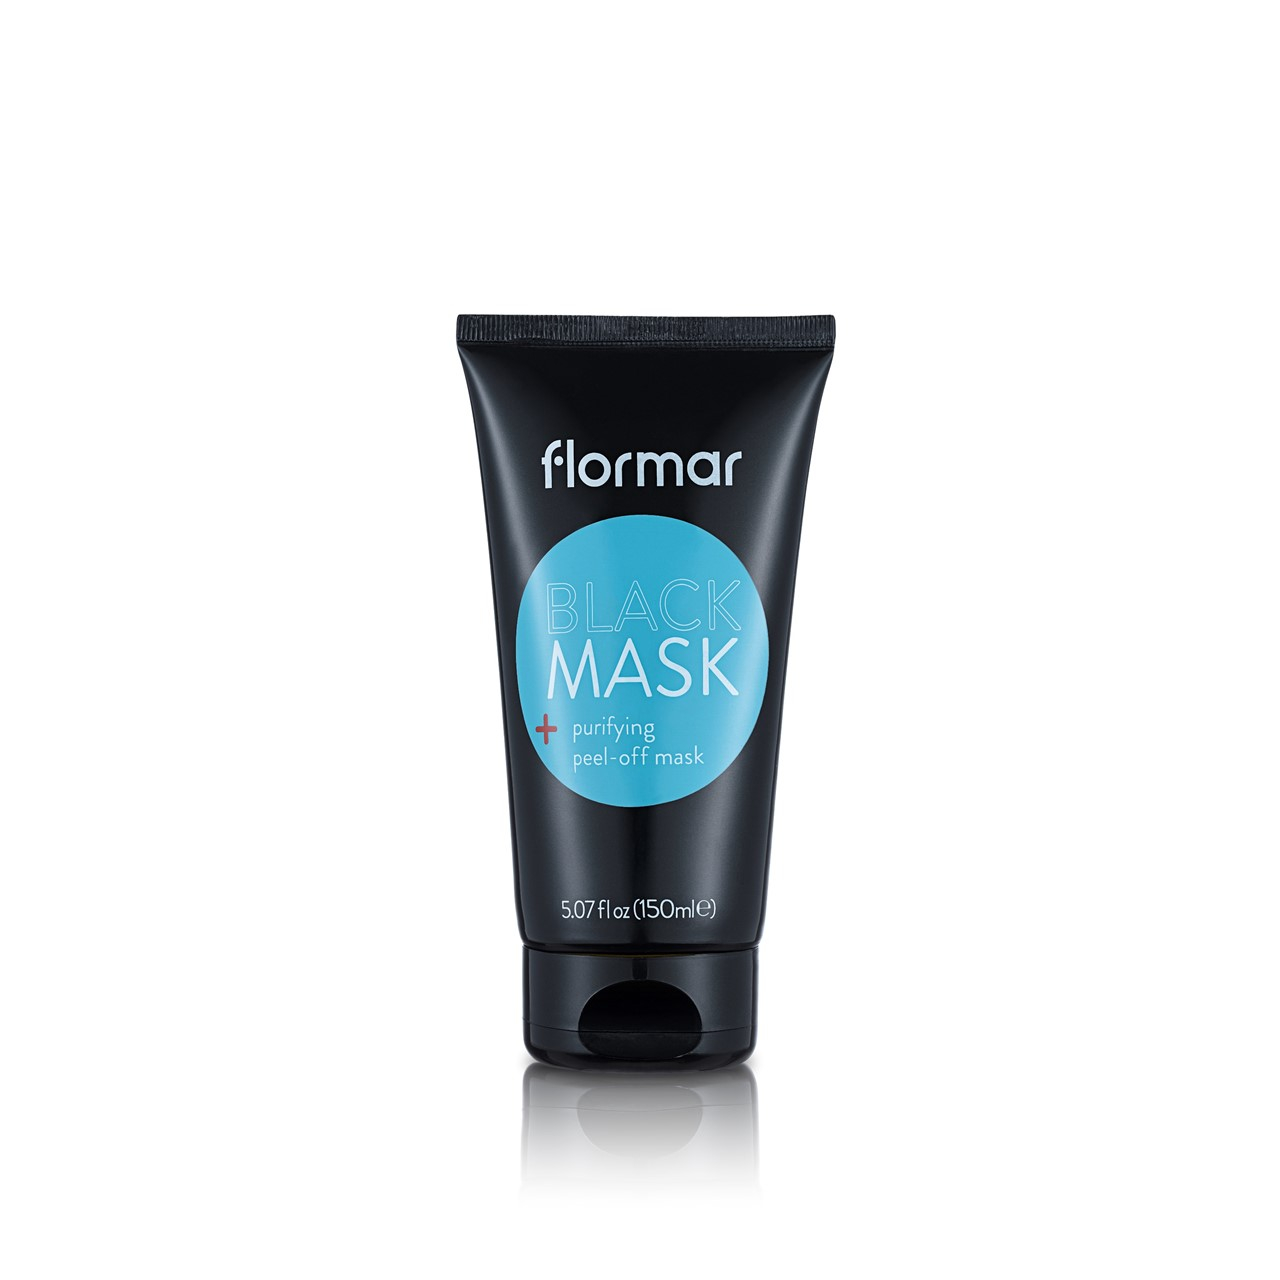 Flormar Black Mask Purifying Peel-Off Mask 150ml (5.07fl oz)